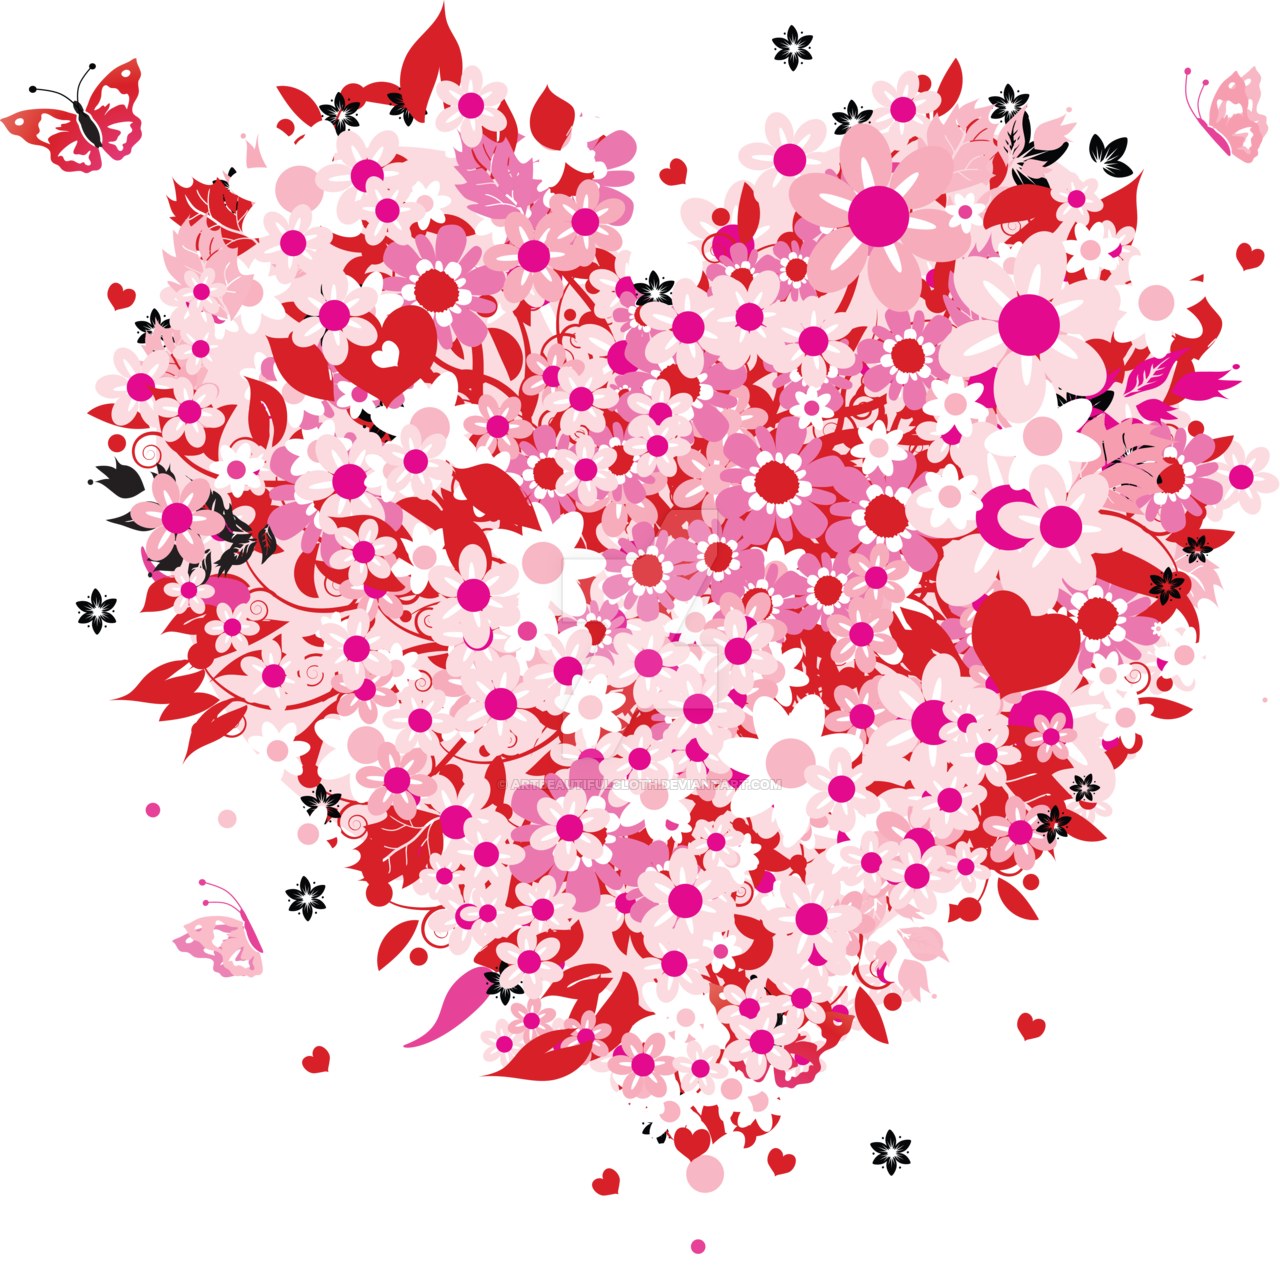 floral_pink_heart_by_artbeautifulcloth-d8xn3pu